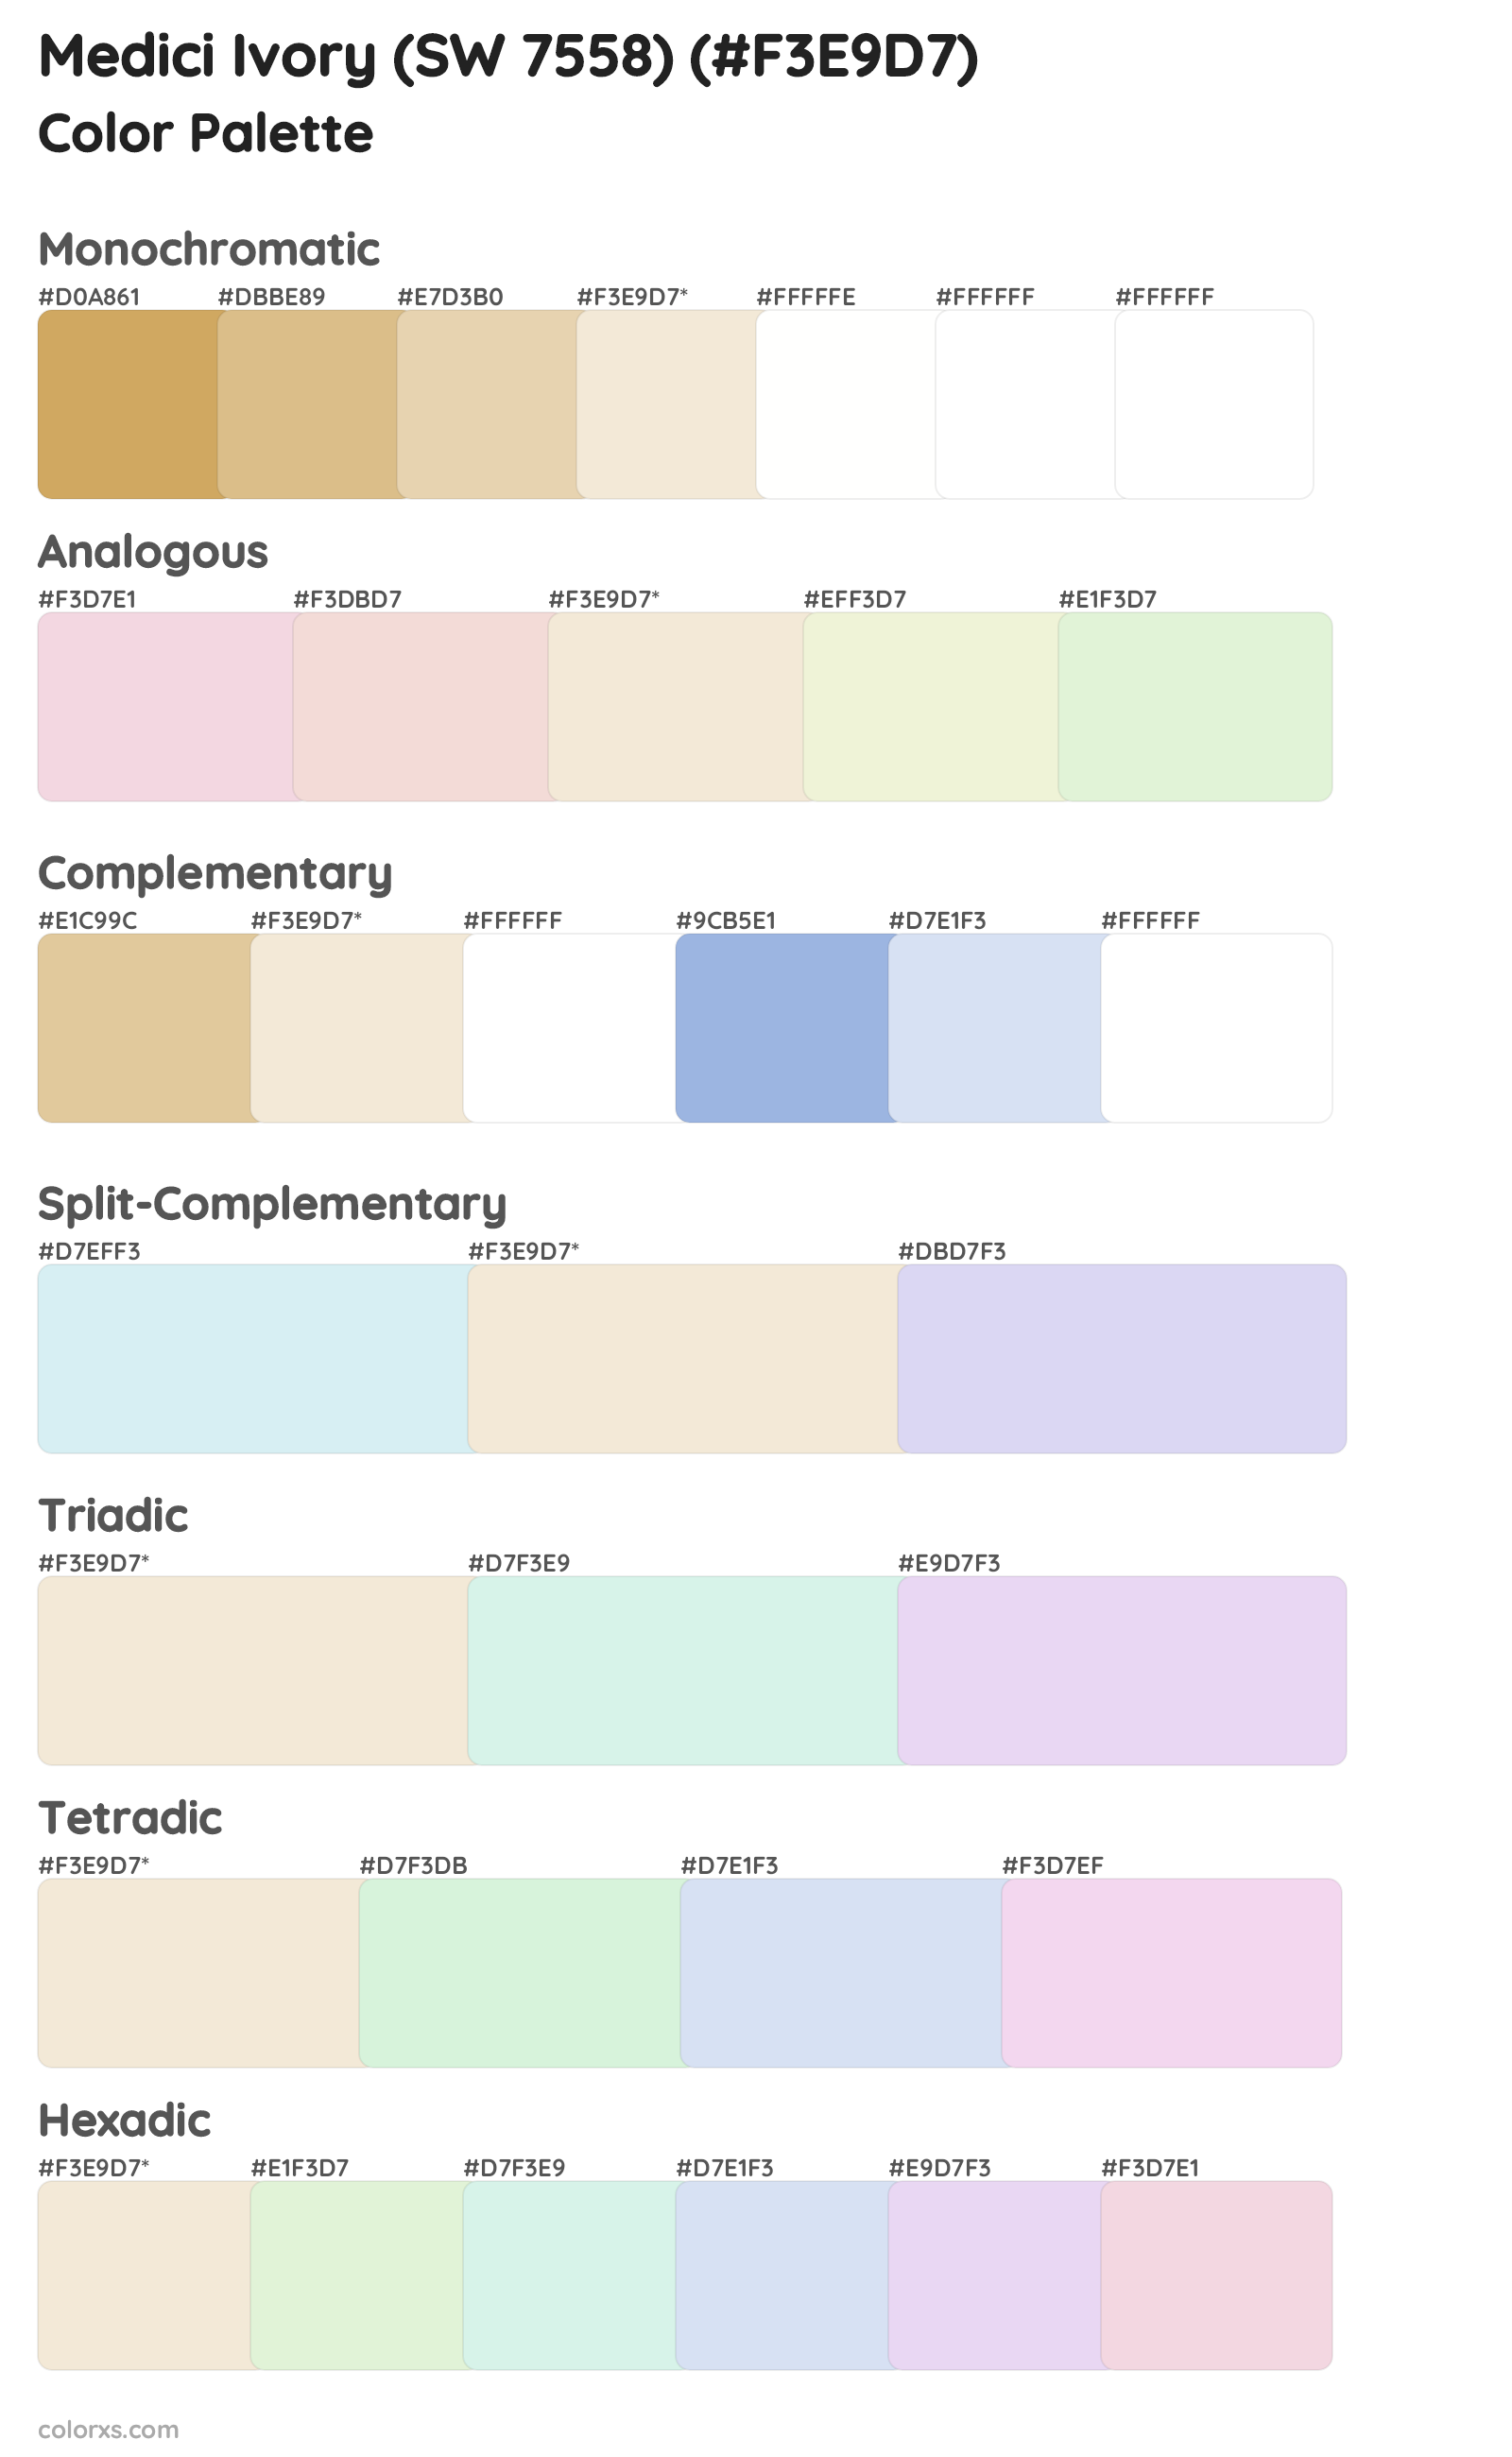 Medici Ivory (SW 7558) Color Scheme Palettes